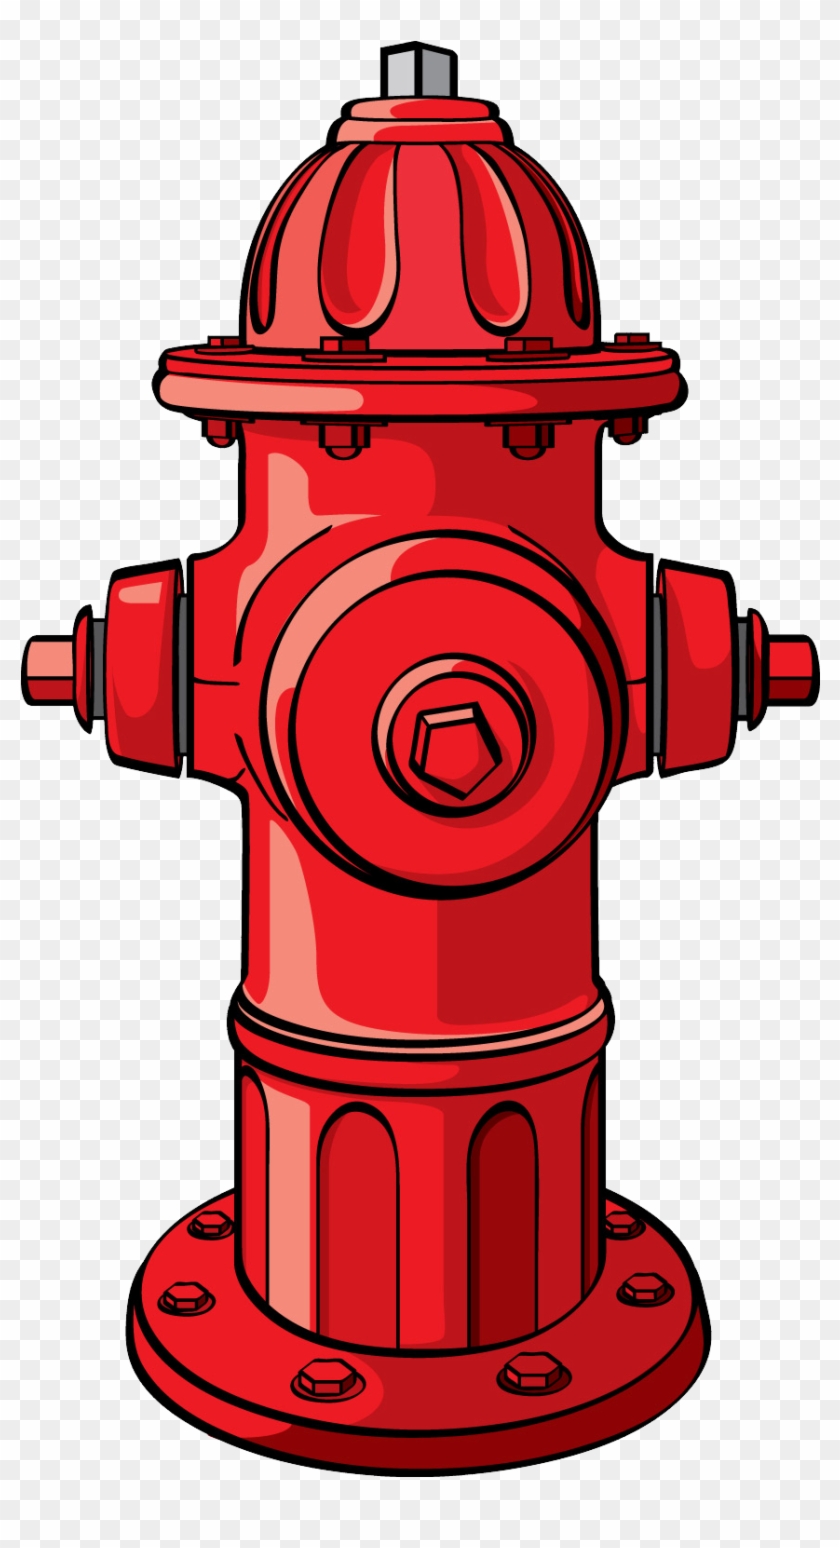 Fire Hydrant Firefighter Clip Art - Paw Patrol Fire Hydrant #189358